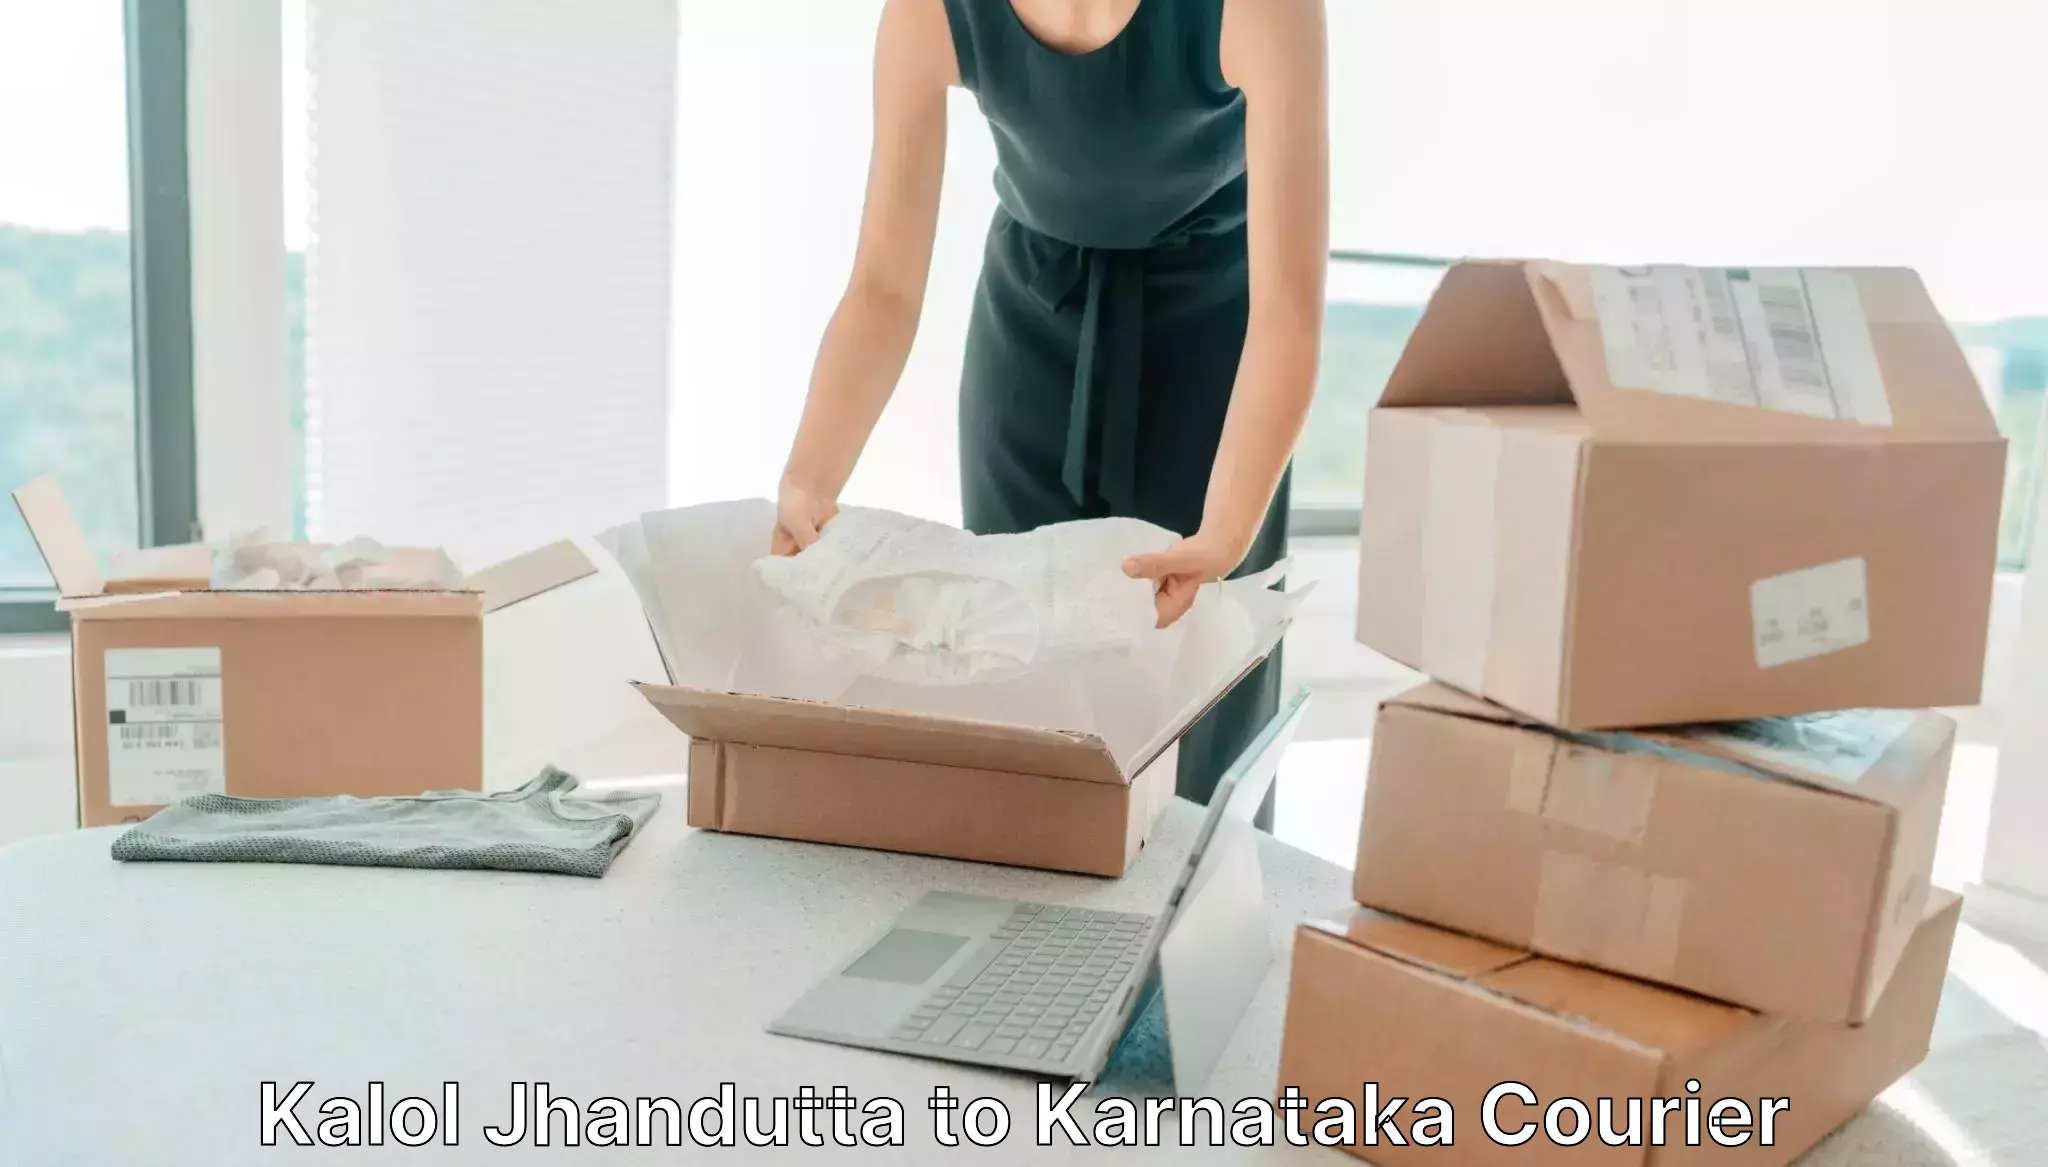 Next-day delivery options Kalol Jhandutta to Karnataka